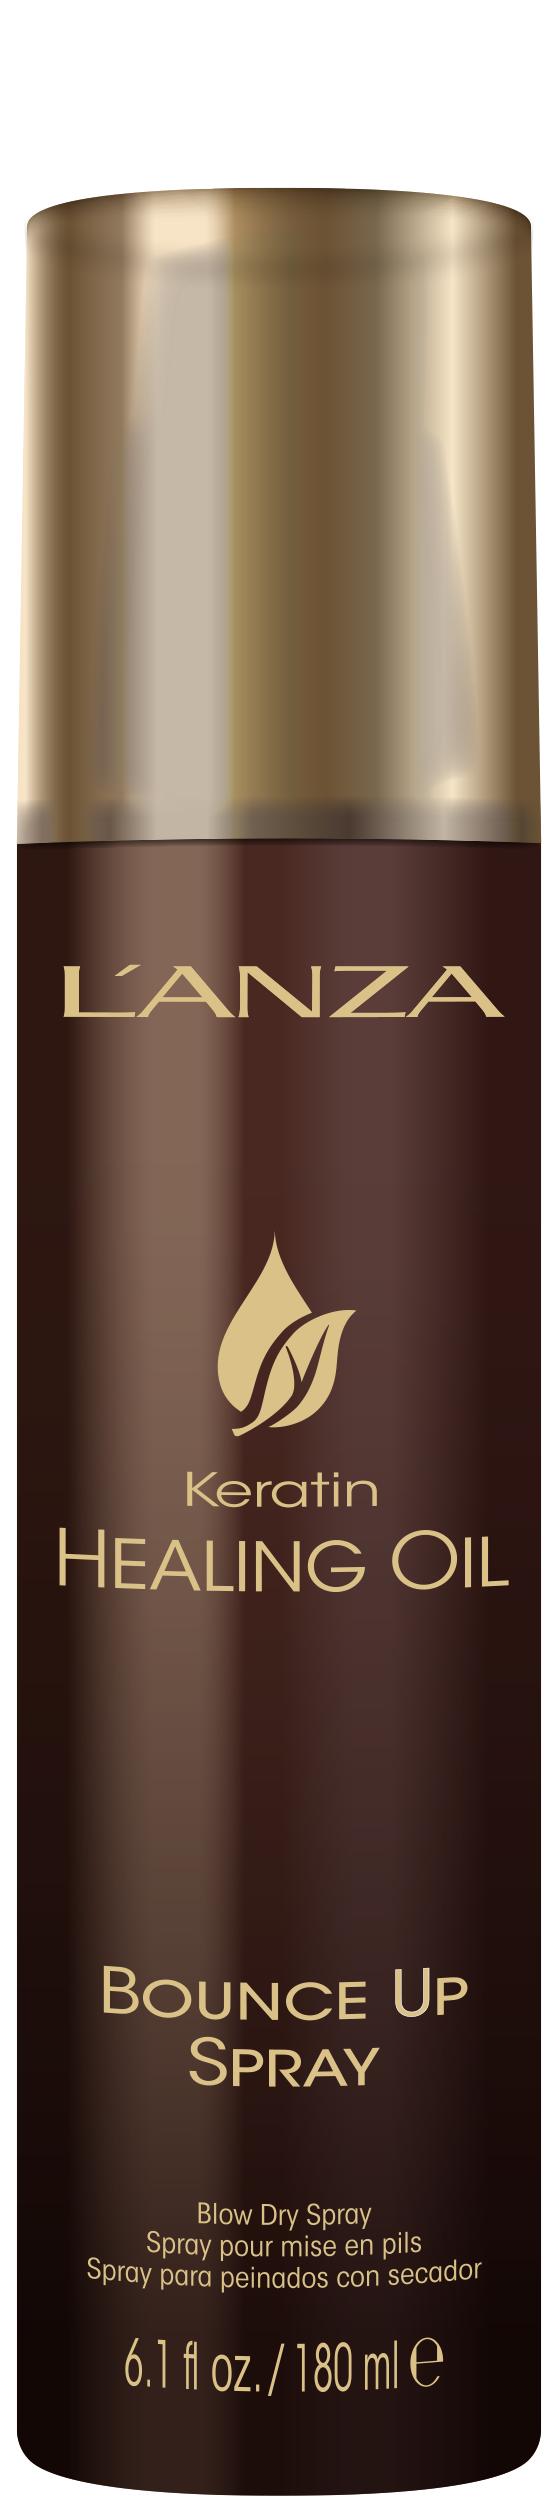 L'ANZA Keratin Healing Oil Bounce Up Spray